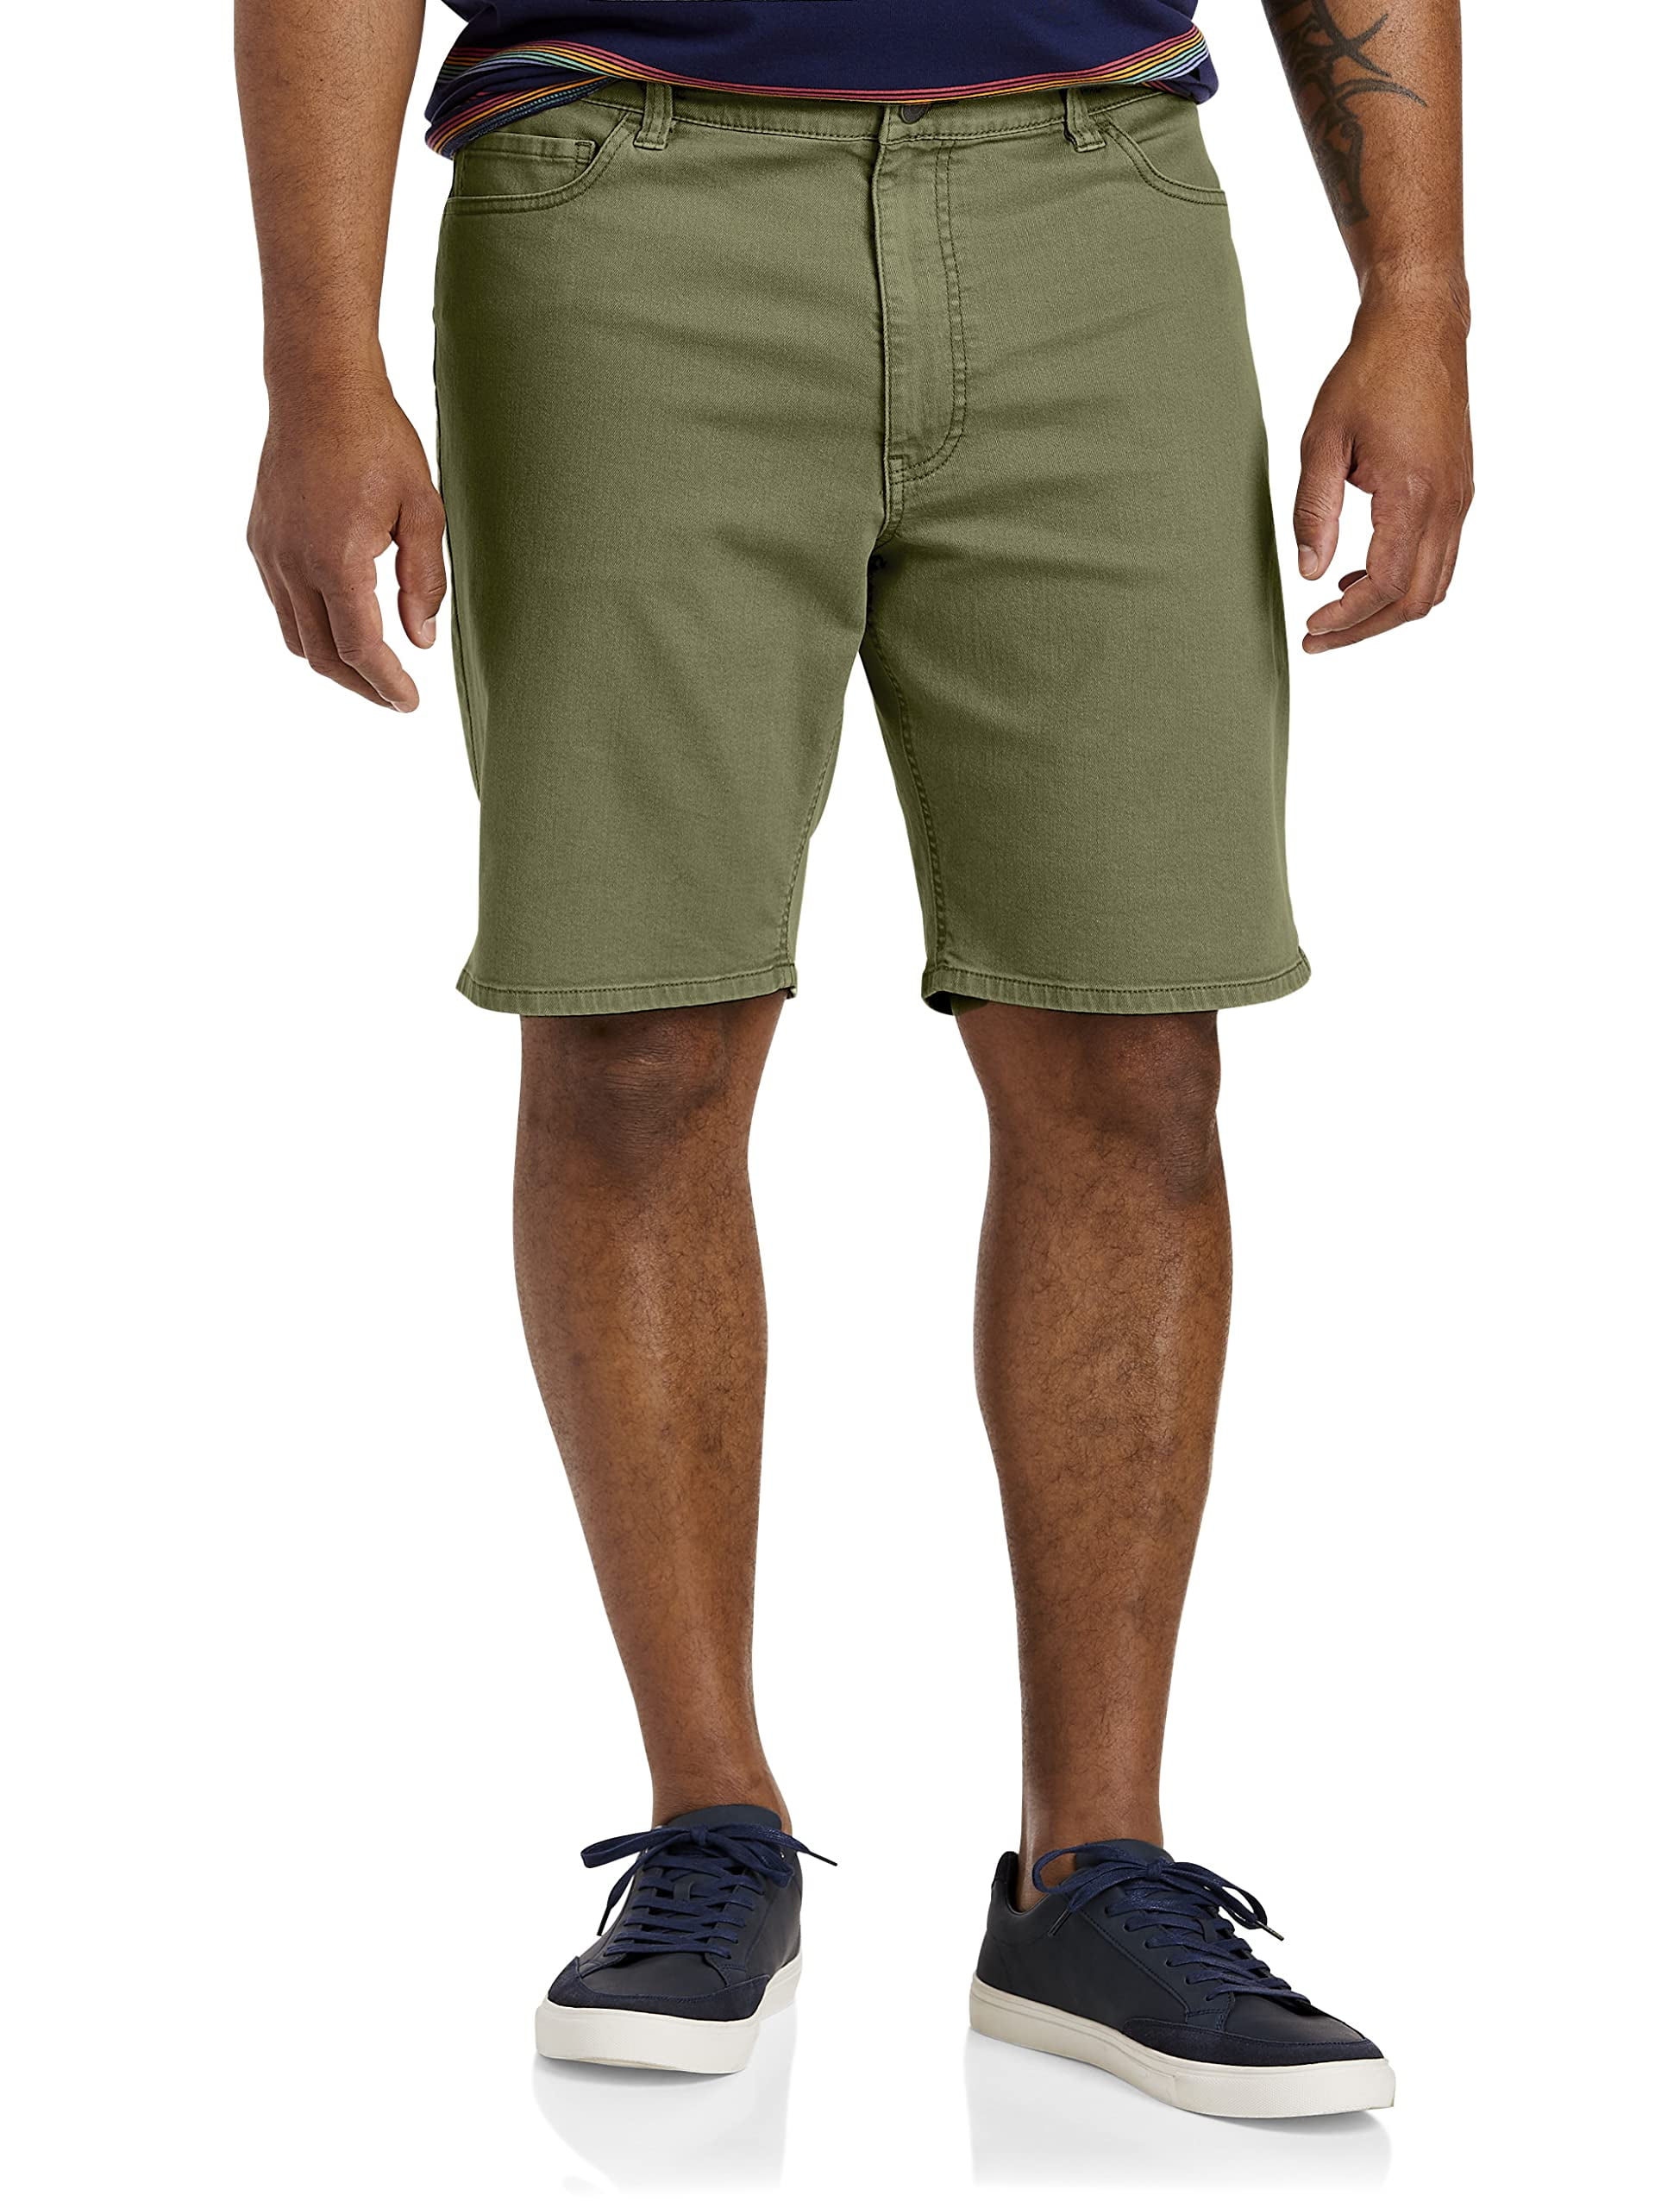 True Nation by DXL Men's Big & Tall 5-Pocket Sunwashed Shorts